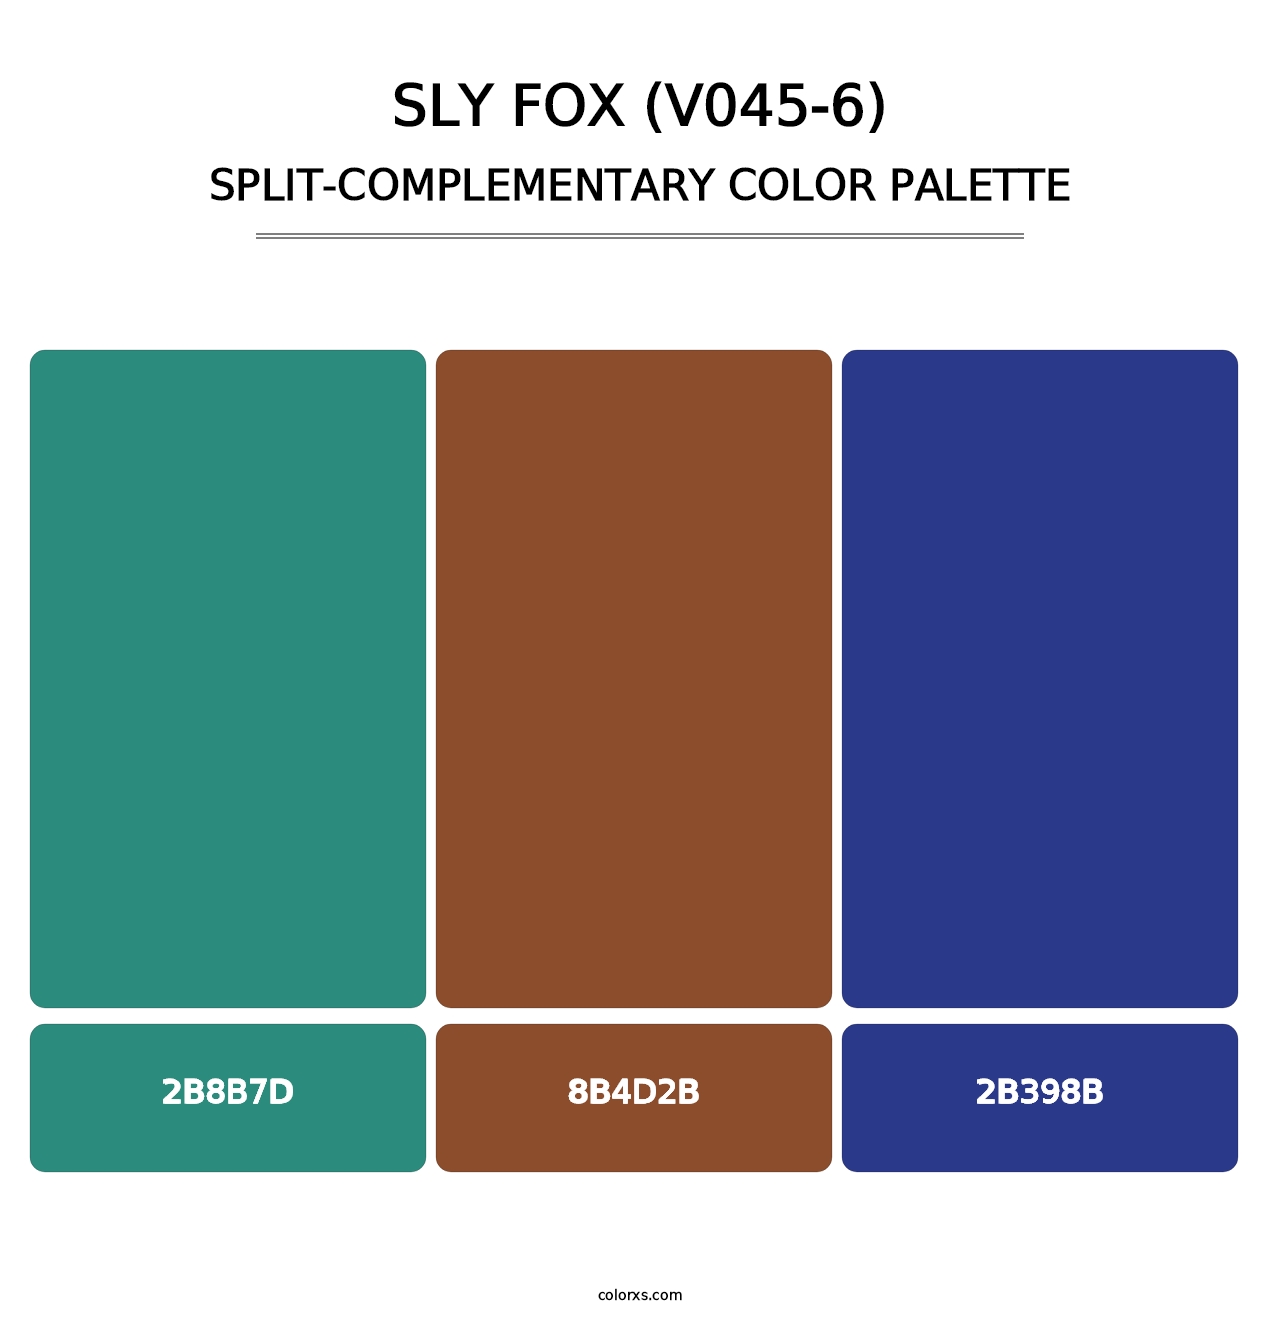 Sly Fox (V045-6) - Split-Complementary Color Palette